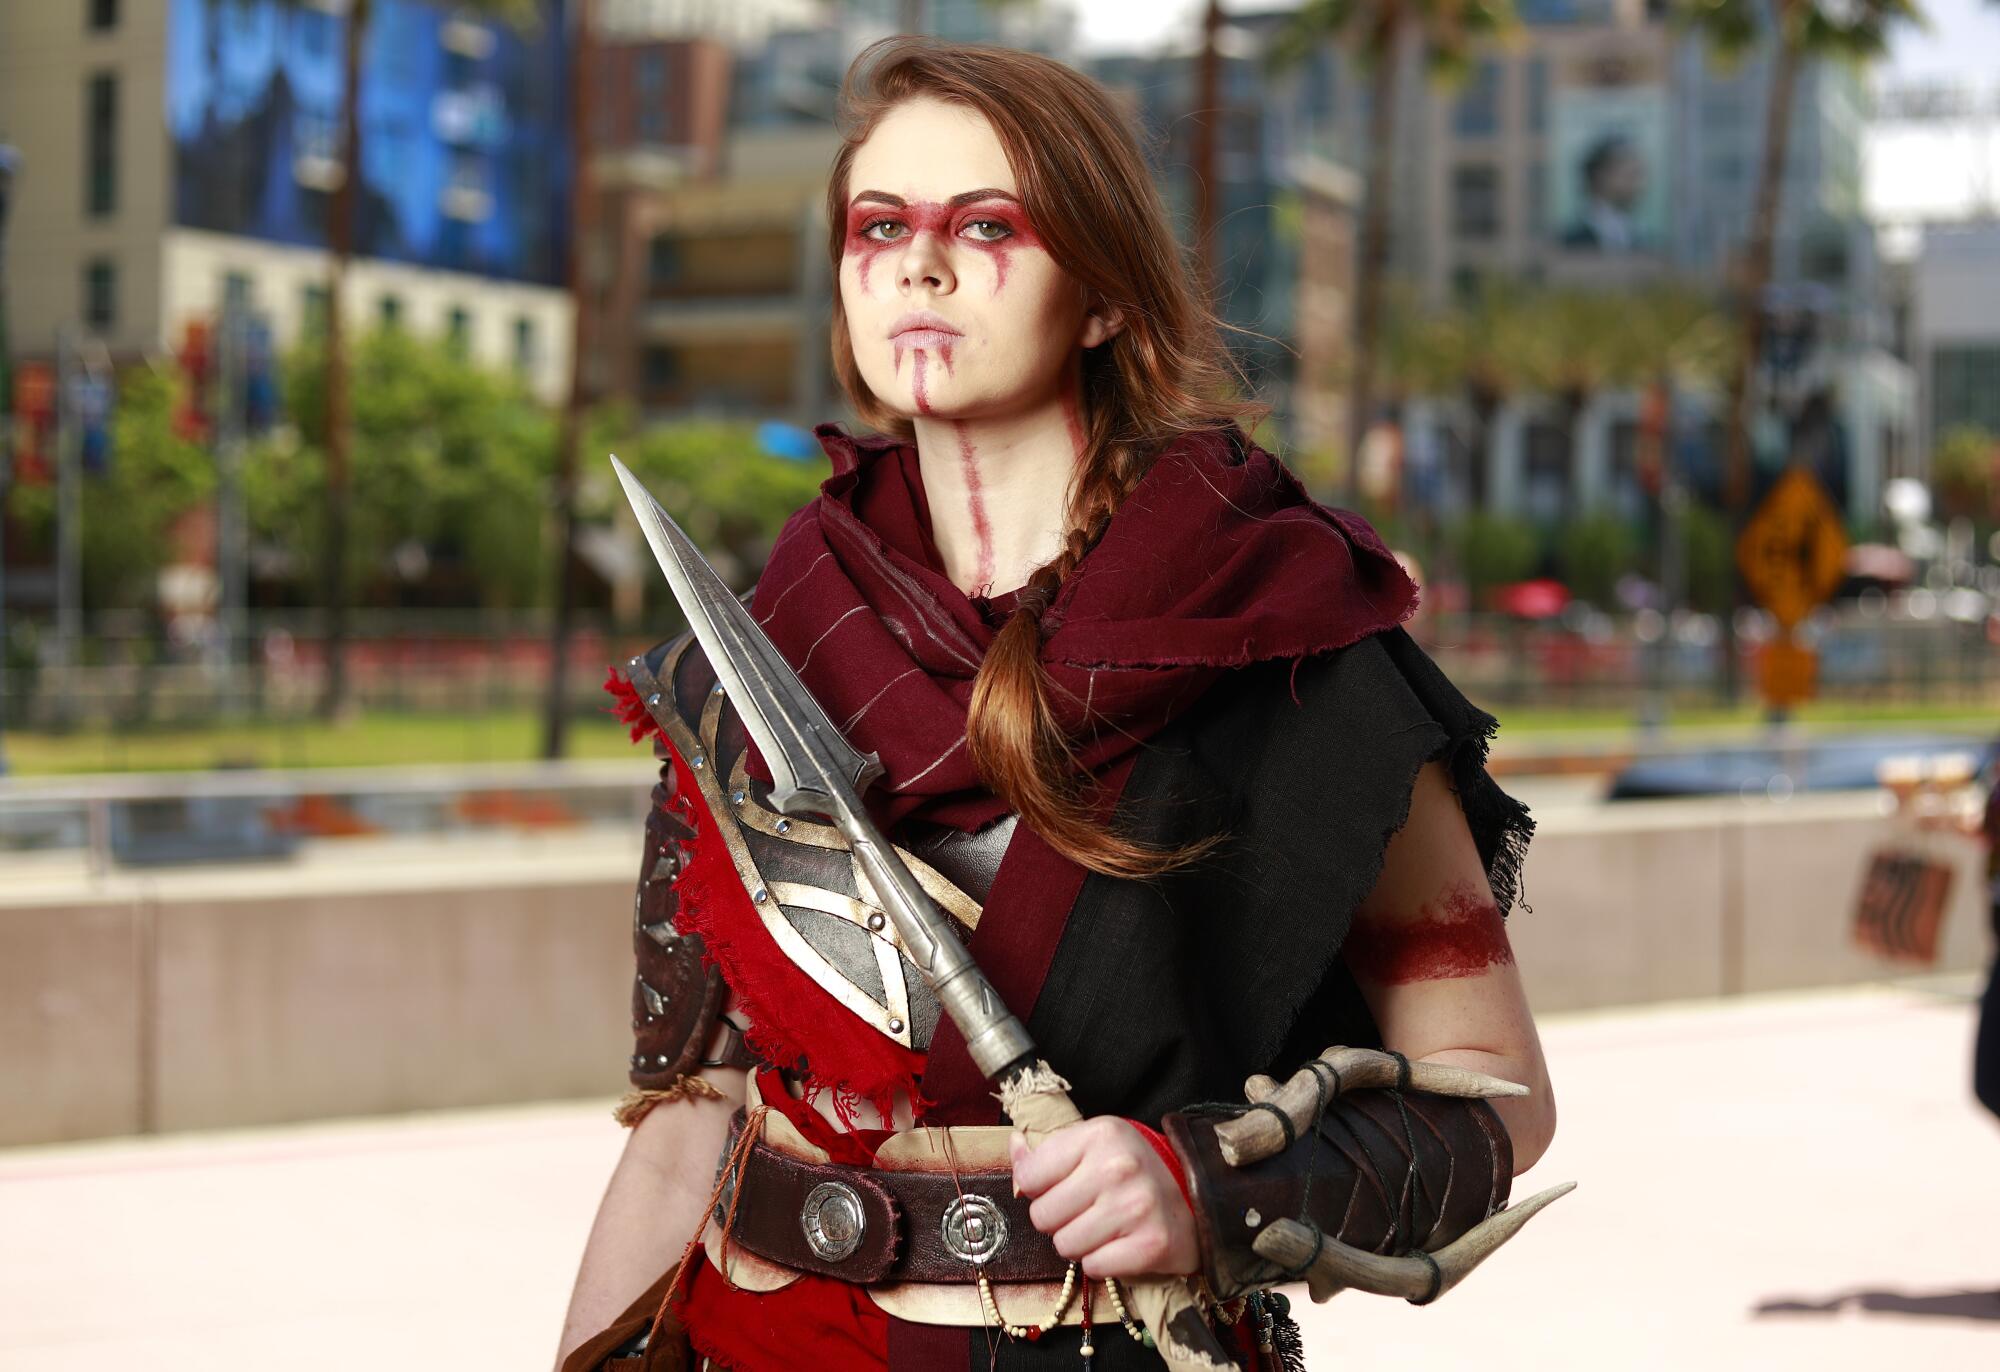 Alexa Paul of Yorba Linda dressed as Kassandra from "Assassin's Creed" at Comic-Con.